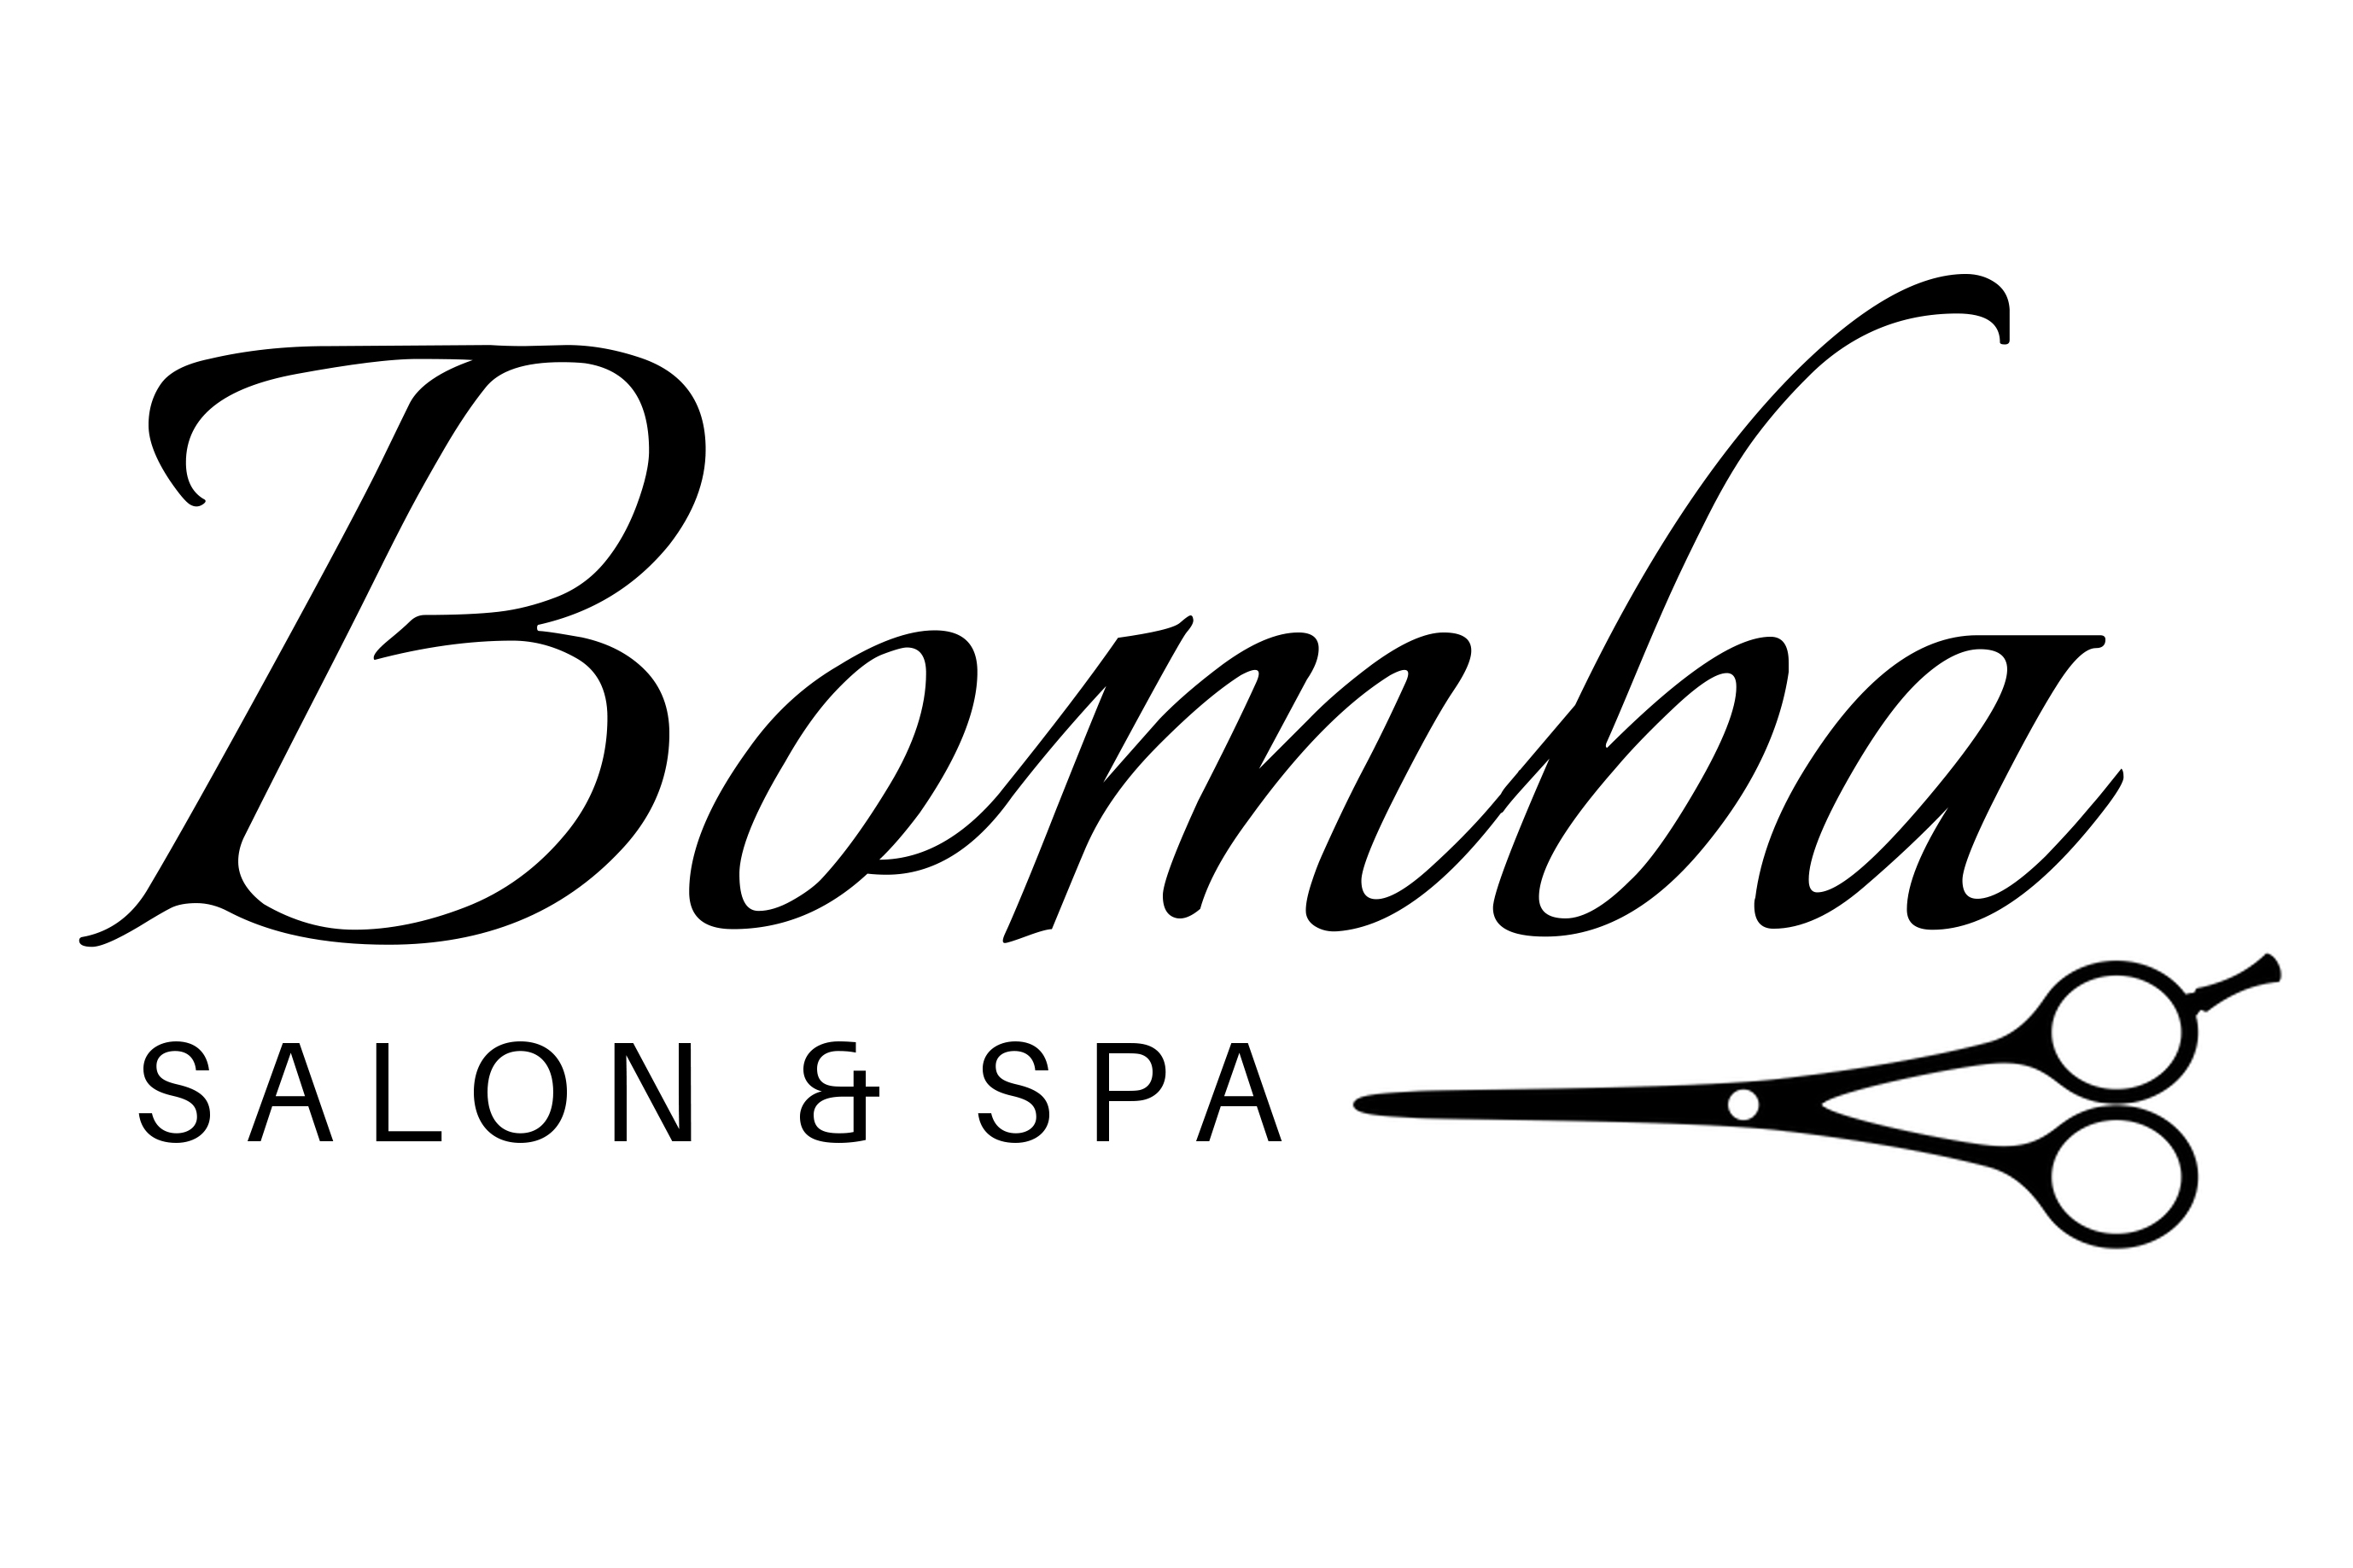 Bomba Salon and Spa